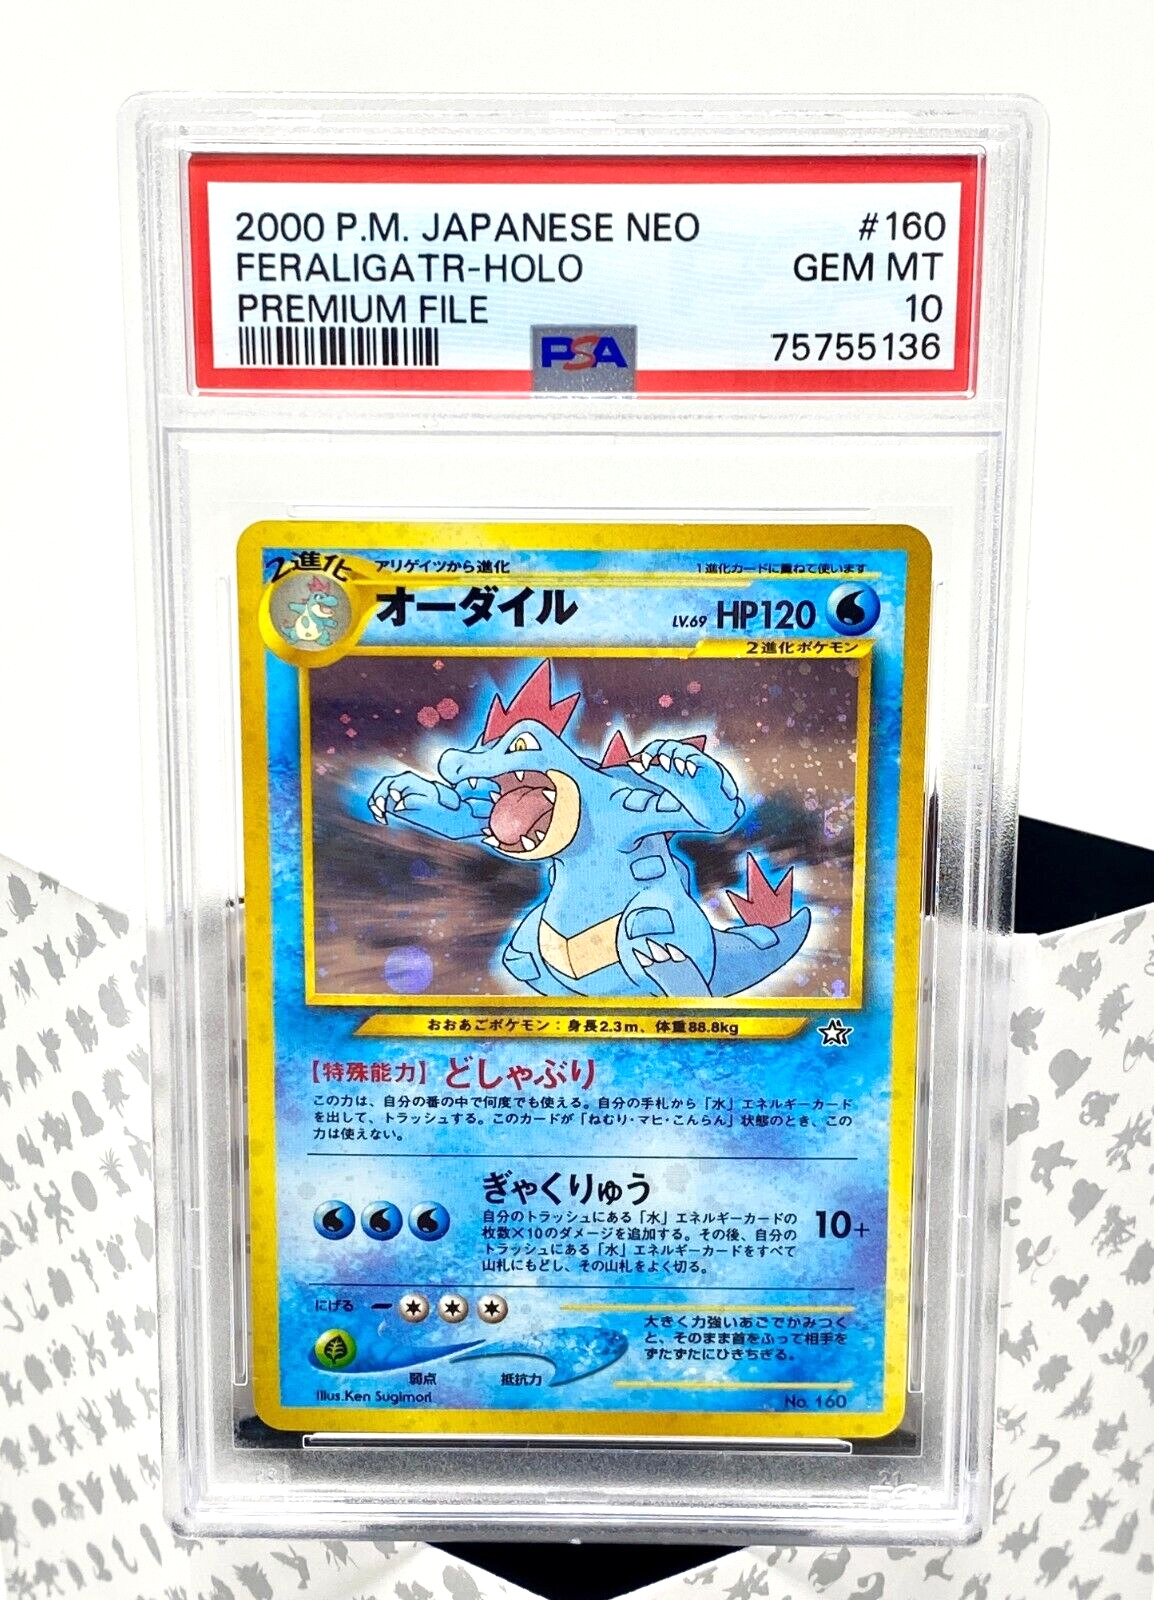 2000 Pokemon Japanese Neo Premium File #160 Feraligatr - Holo PSA 10 GEM MINT